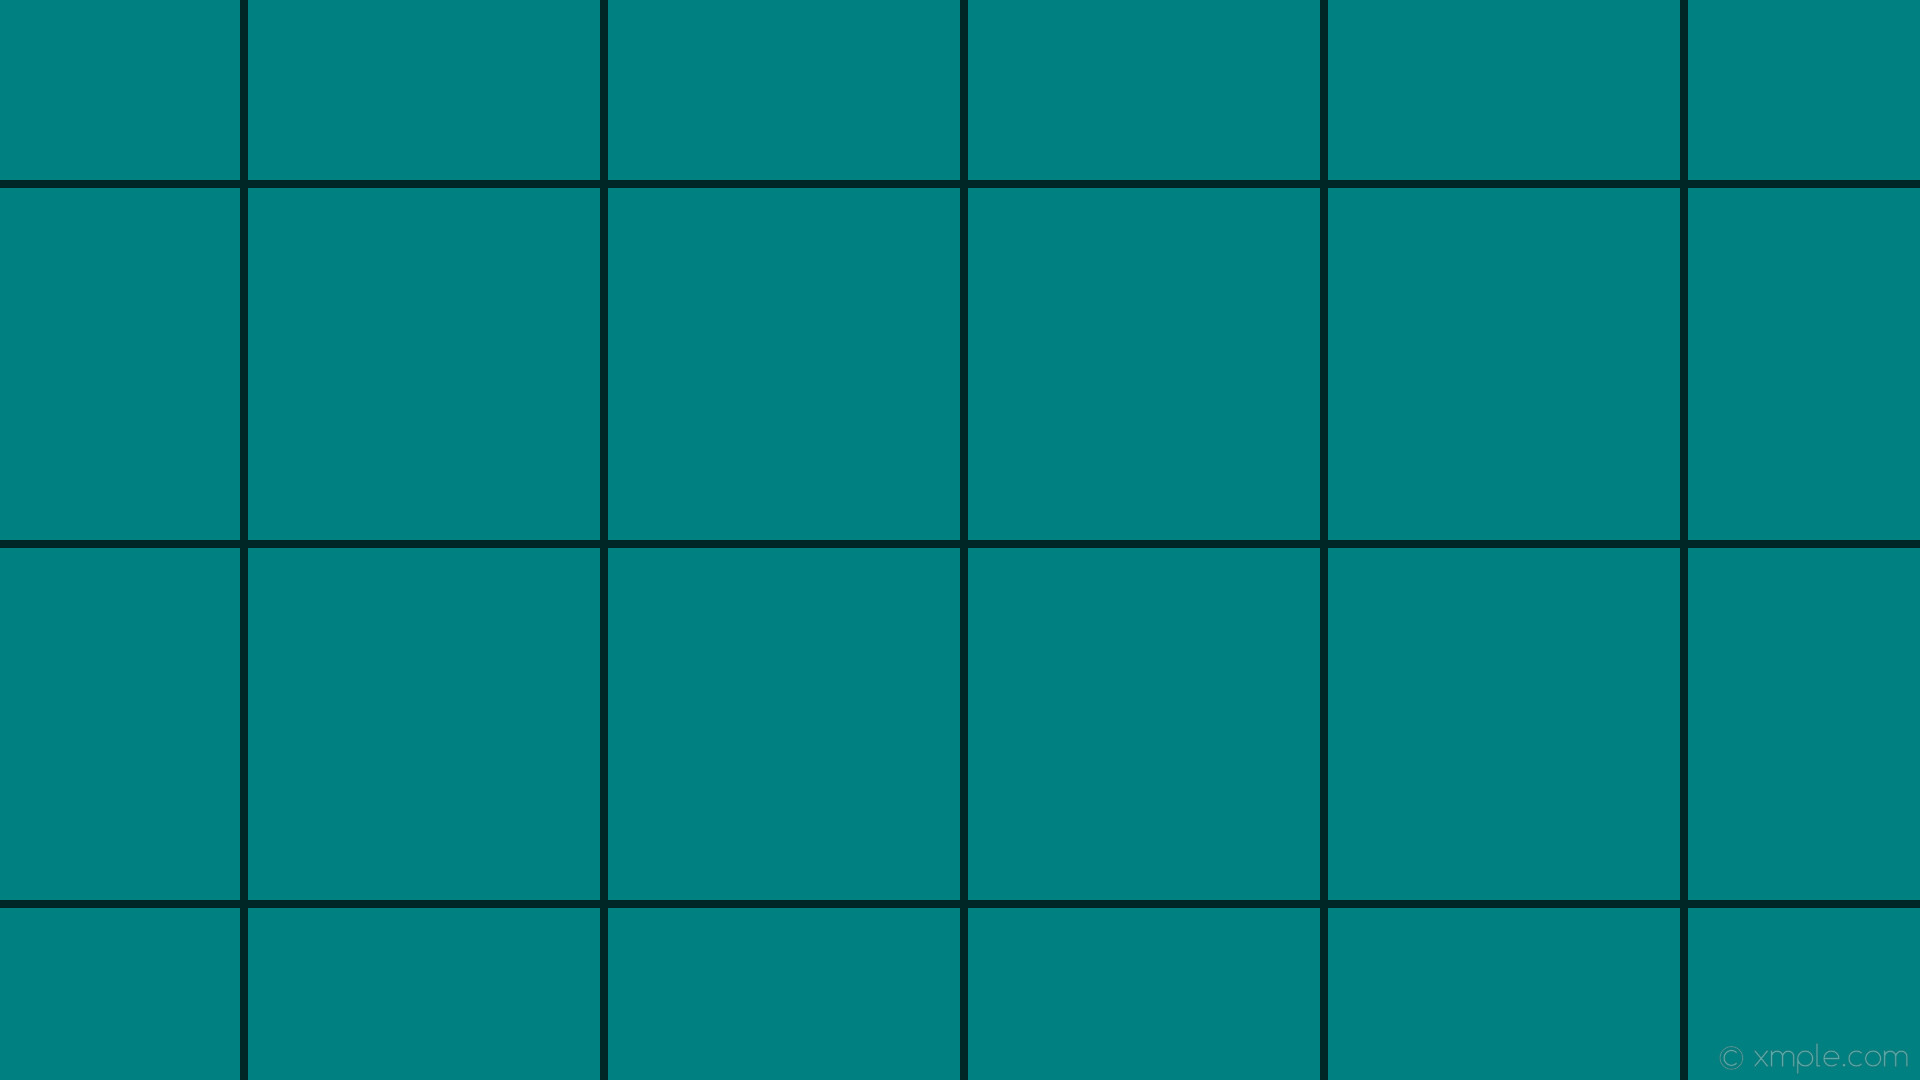 1920x1080 wallpaper graph paper green black grid teal #008080 #000000 0Â° 8px 360px